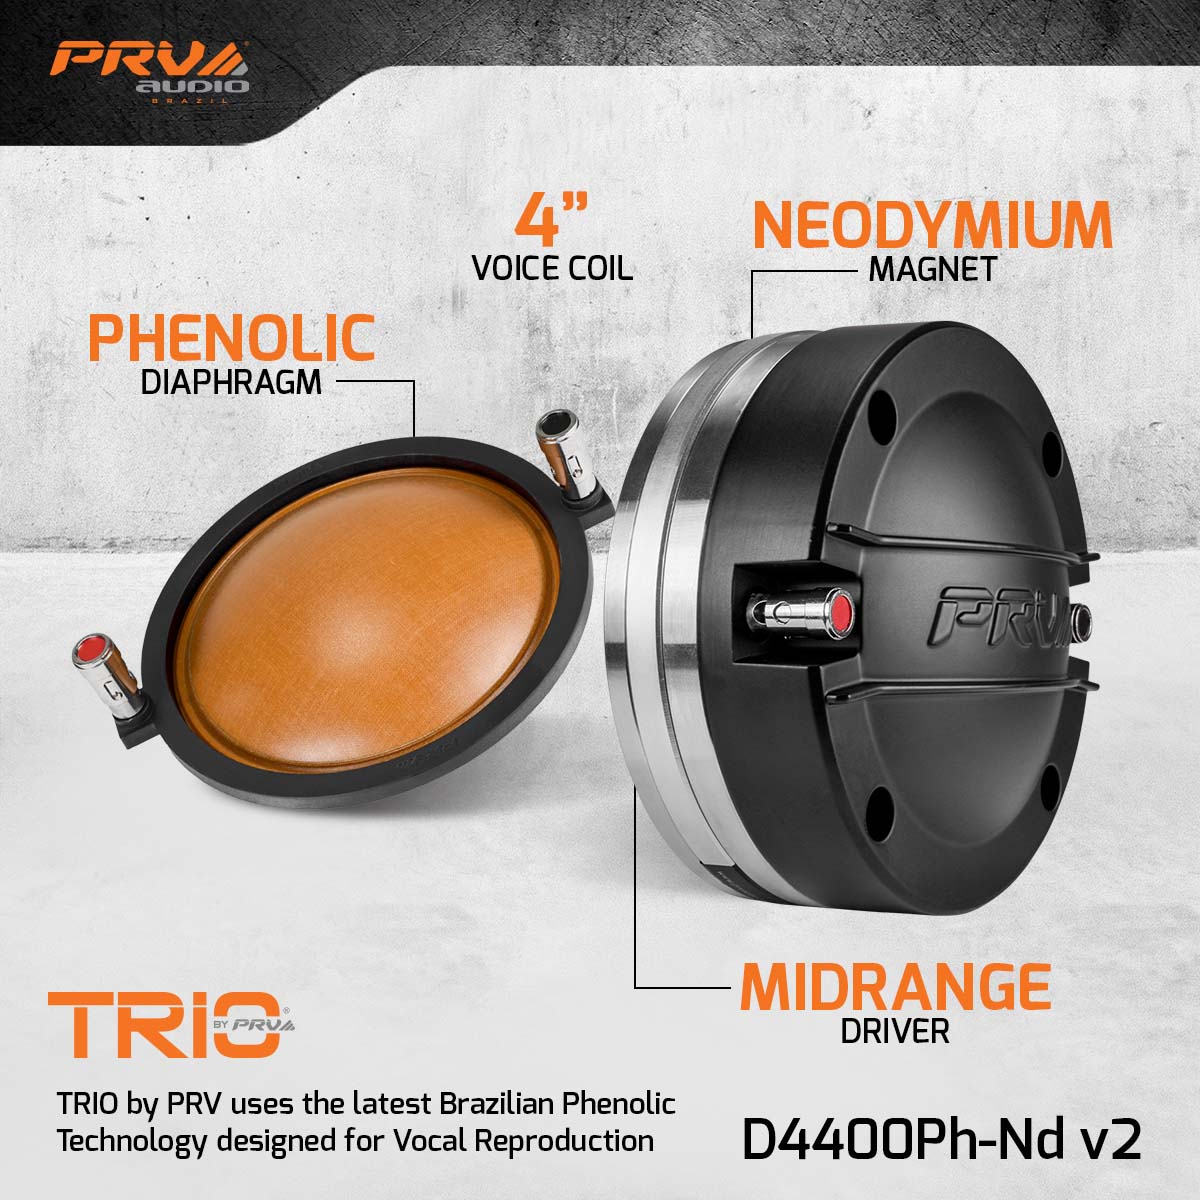 D4400Ph-Nd v2 - TRIO - Infographic